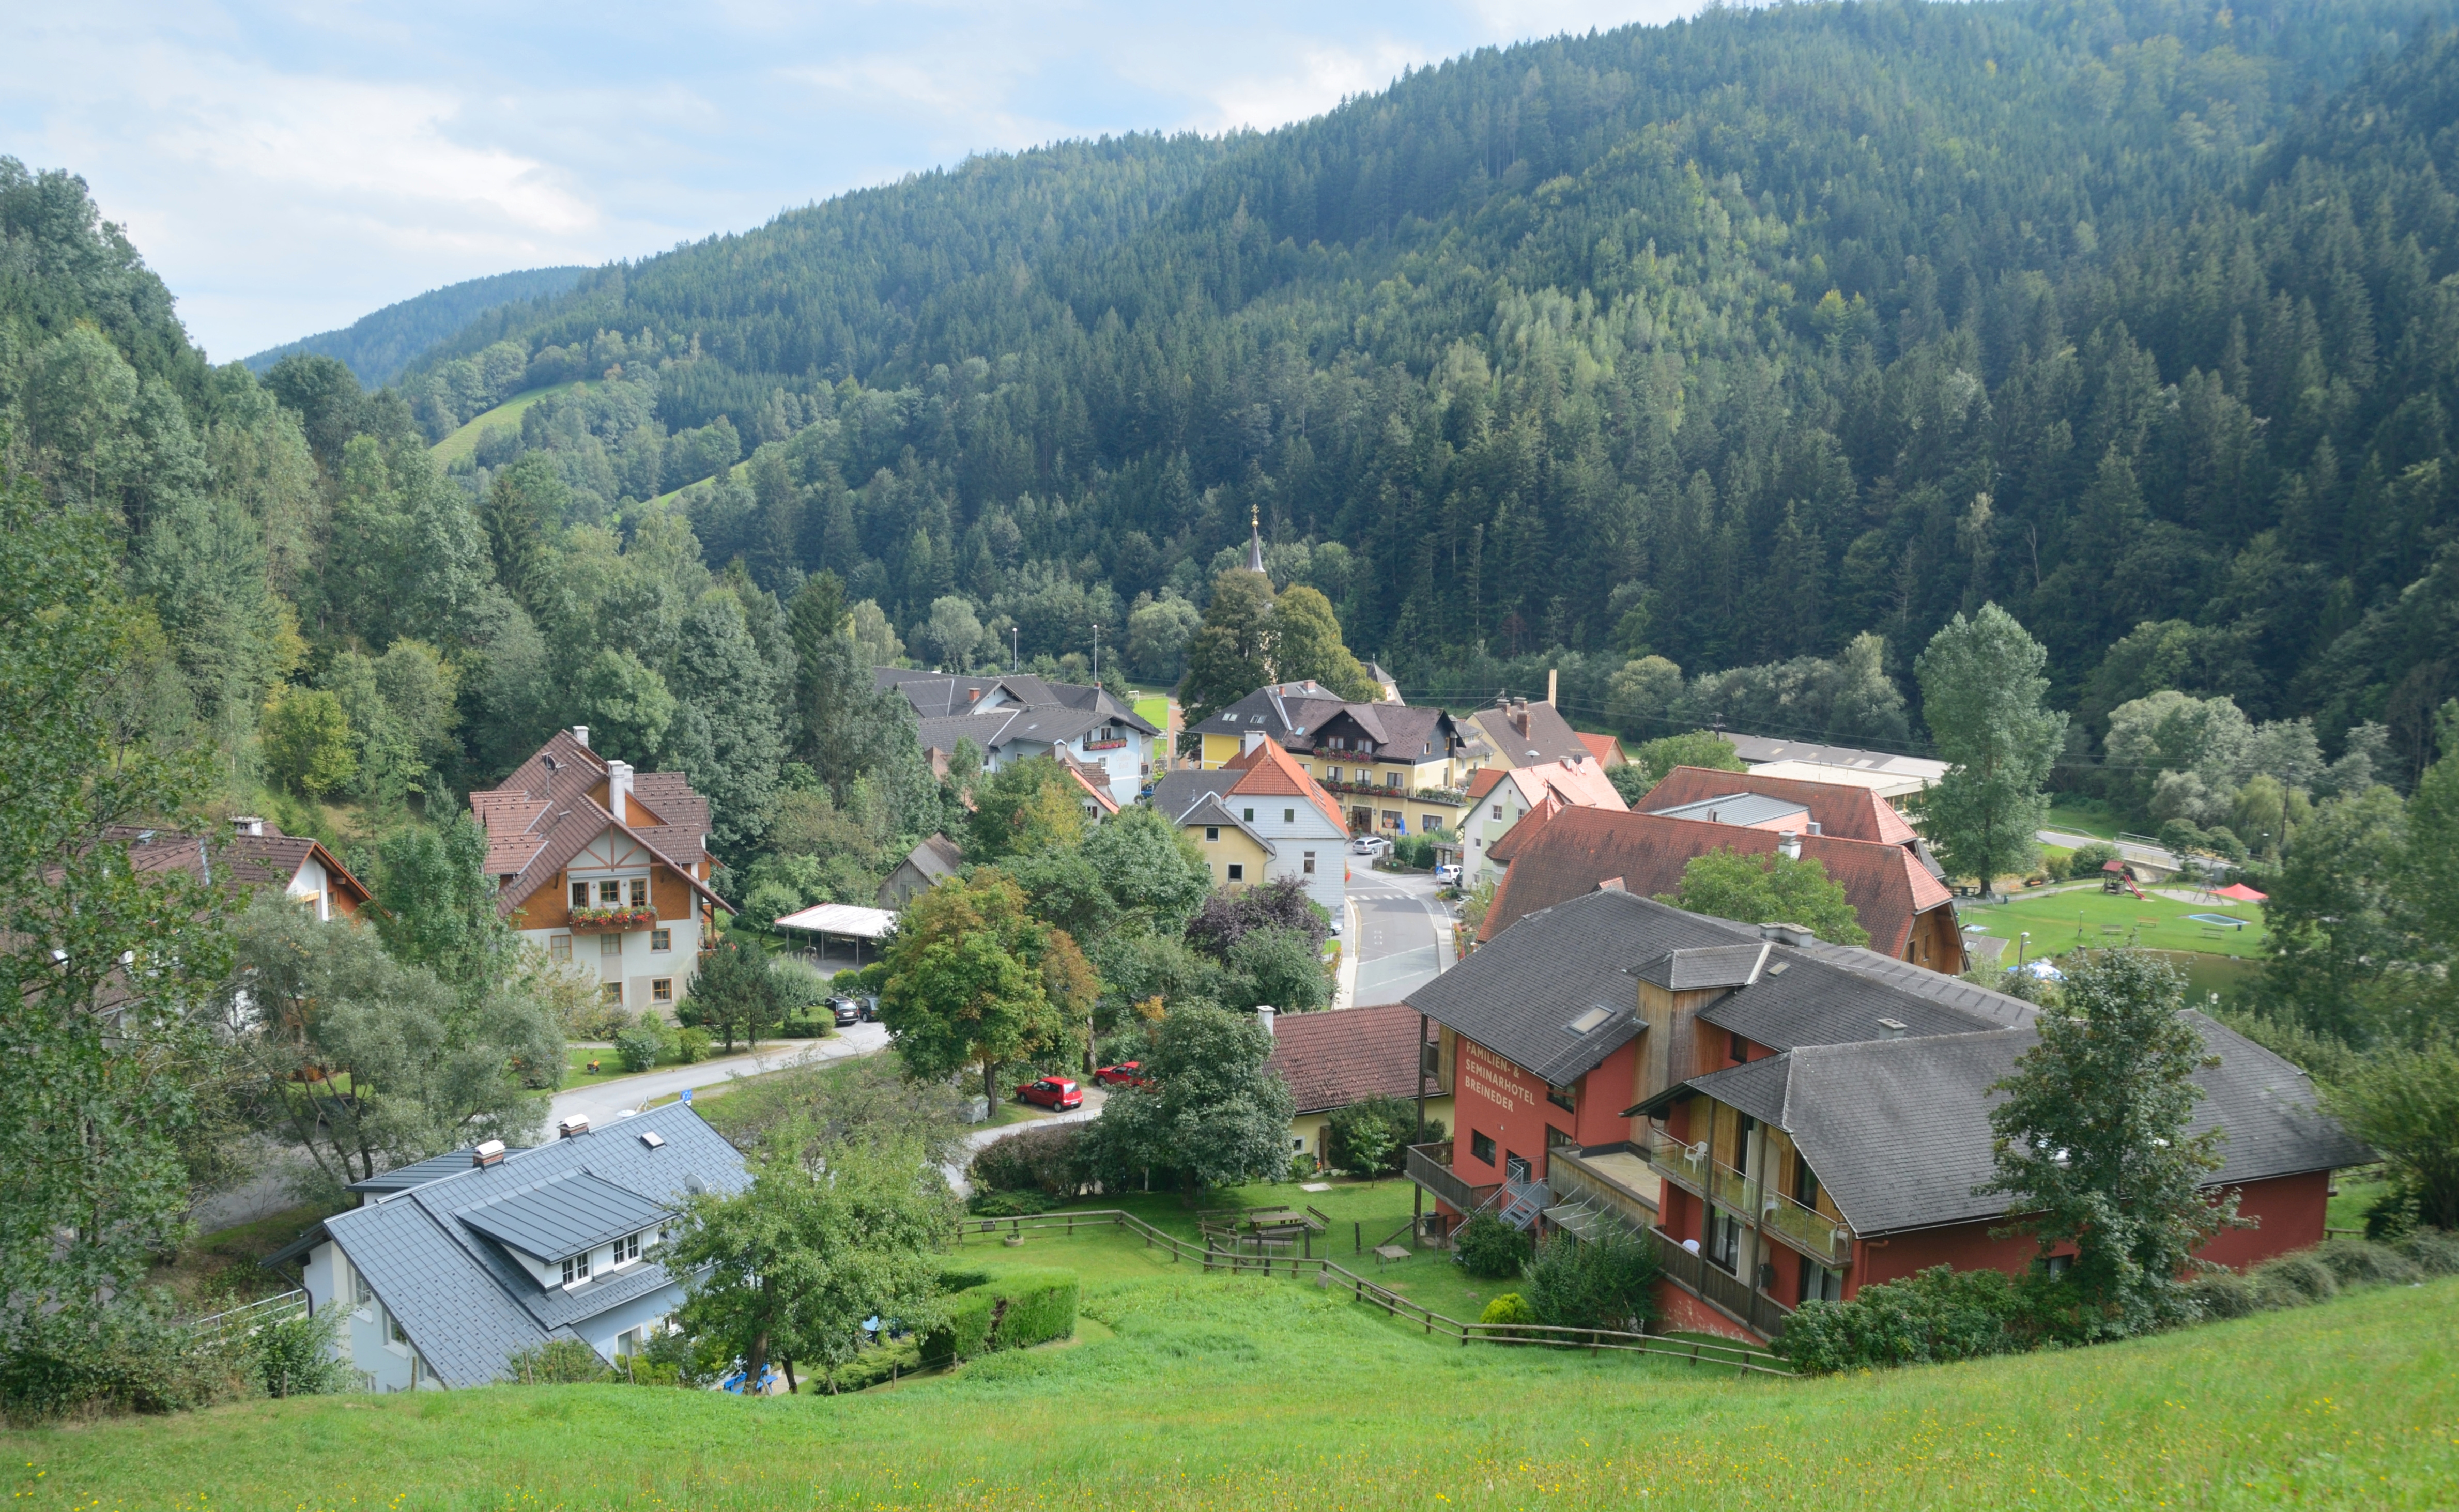 File:Mönichwald, village view.jpg - Wikimedia Commons